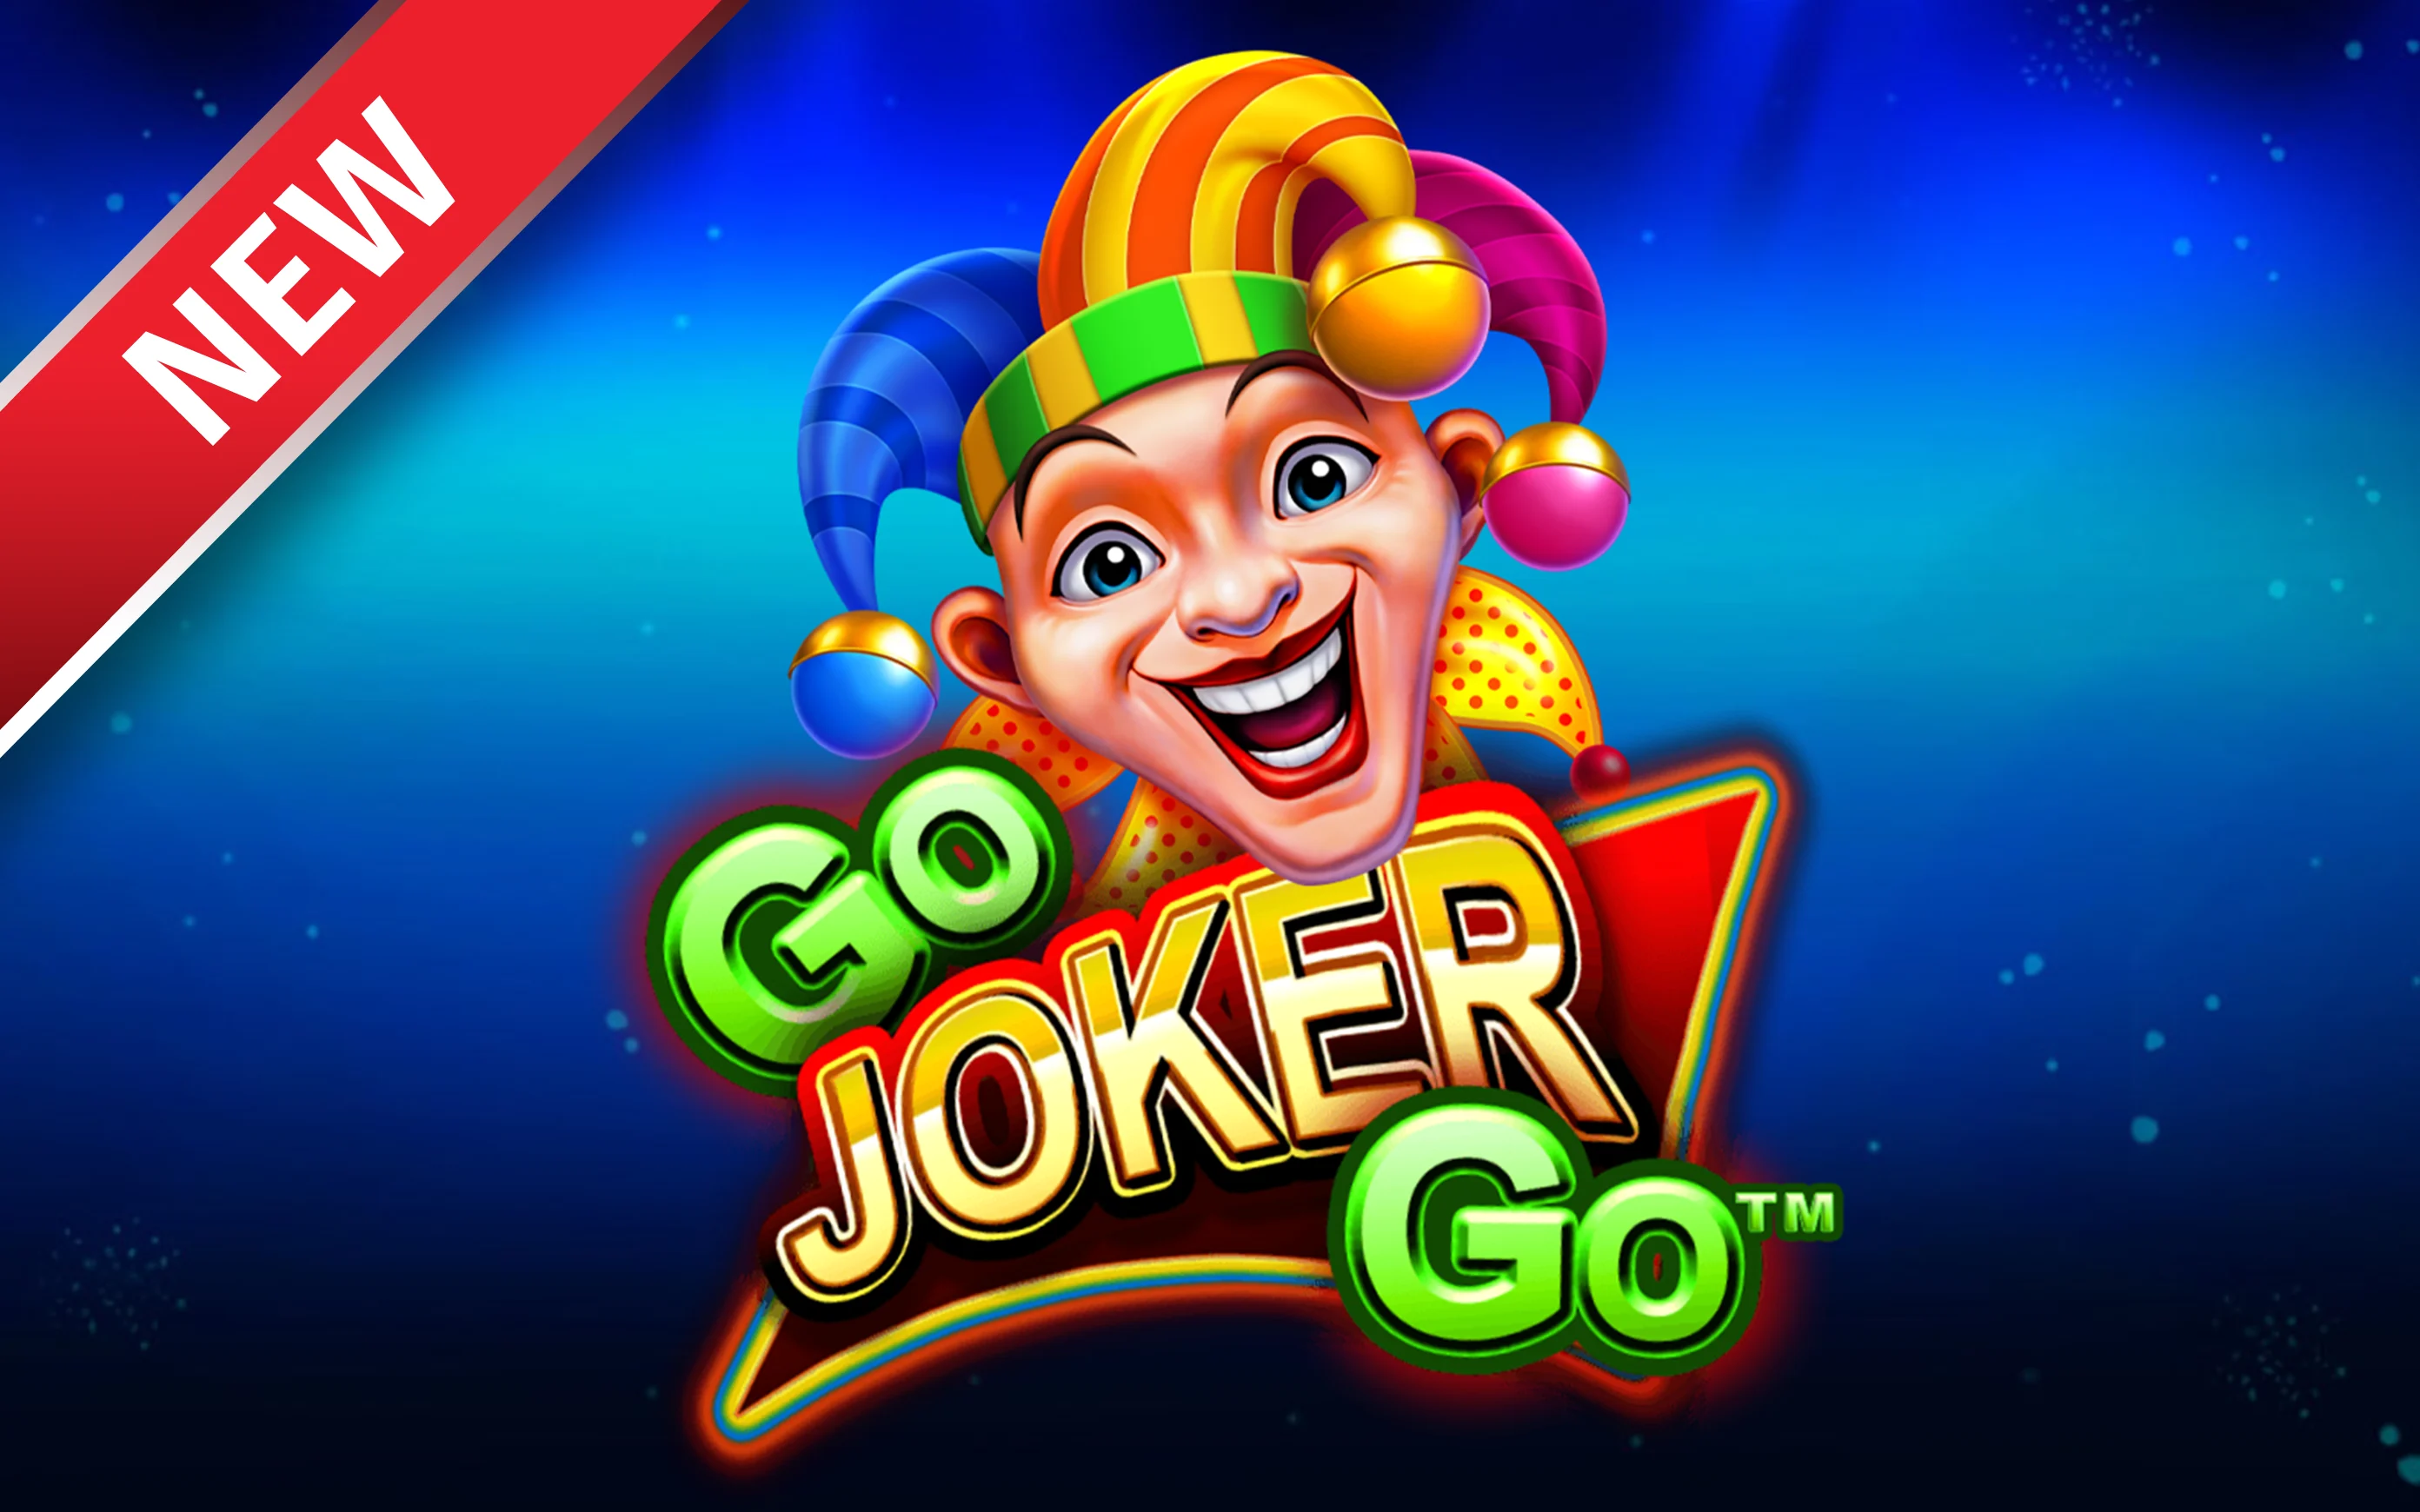 Chơi Go Joker Go trên sòng bạc trực tuyến Starcasino.be